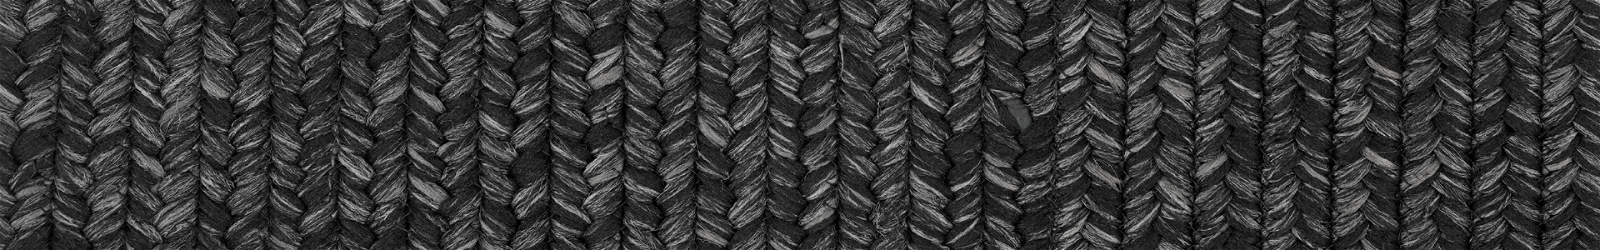 10 x 10 - Black Braided Rugs